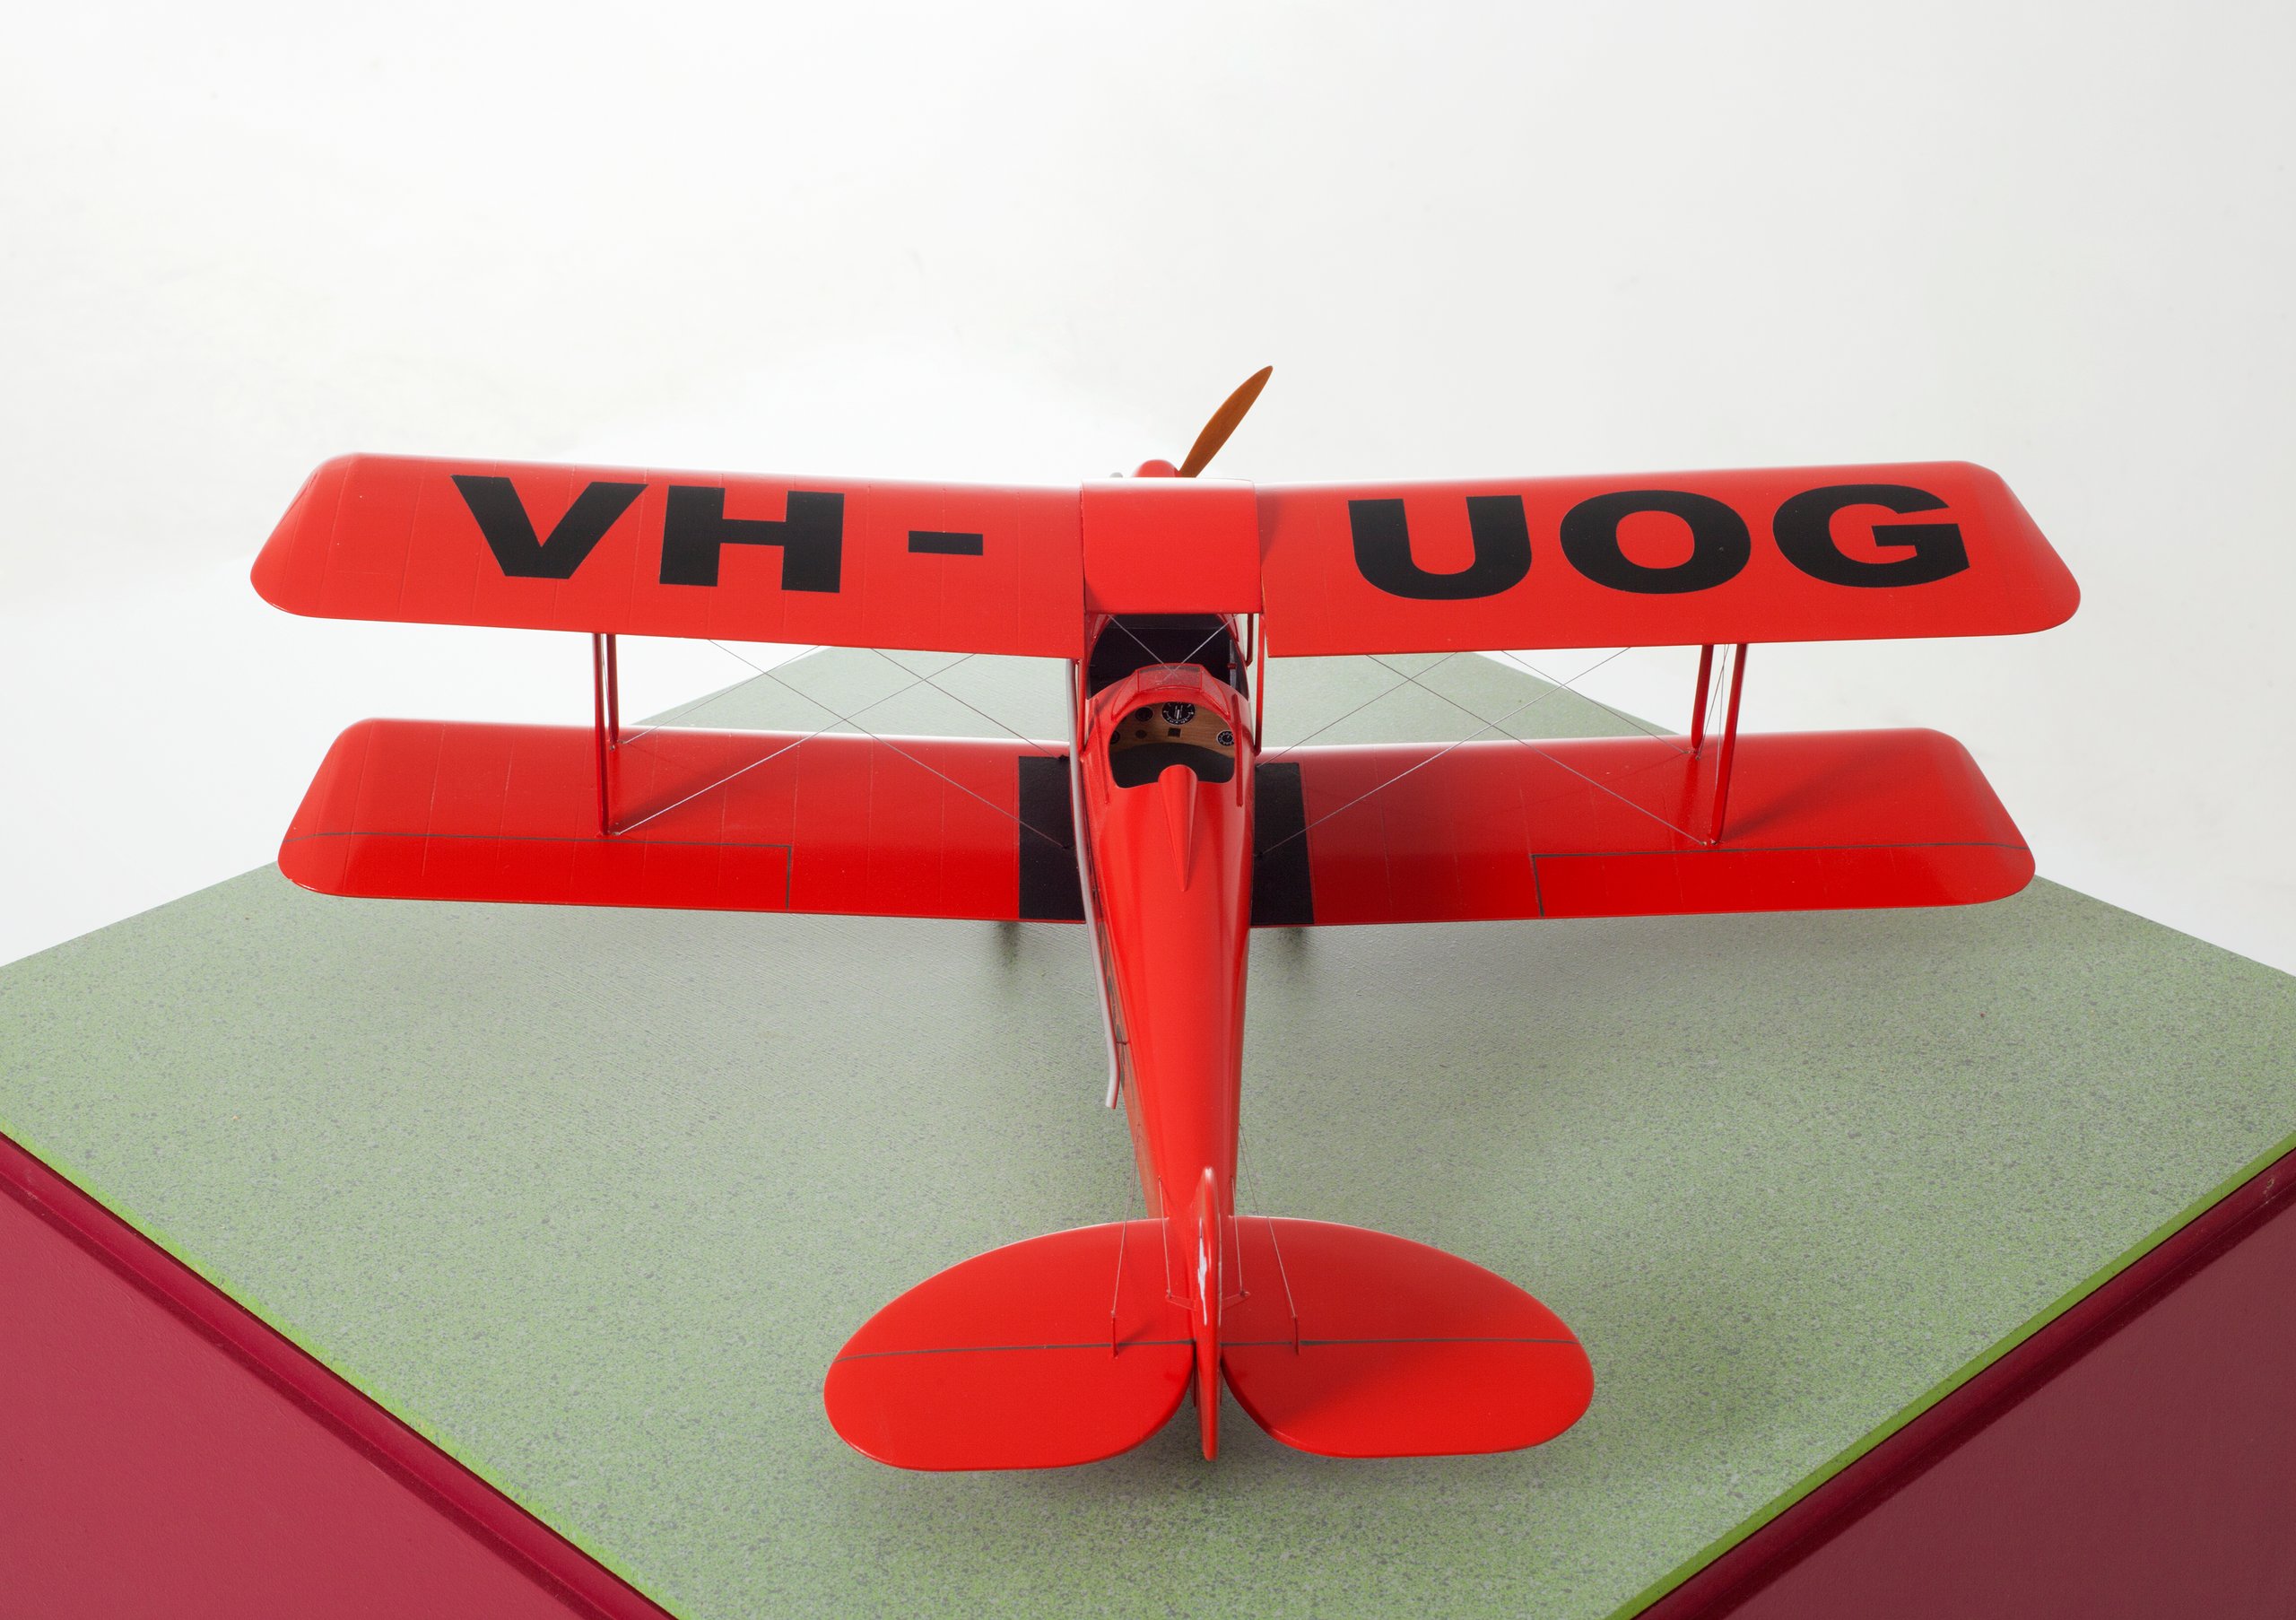 Genairco 'Jolly Roger' aircraft model